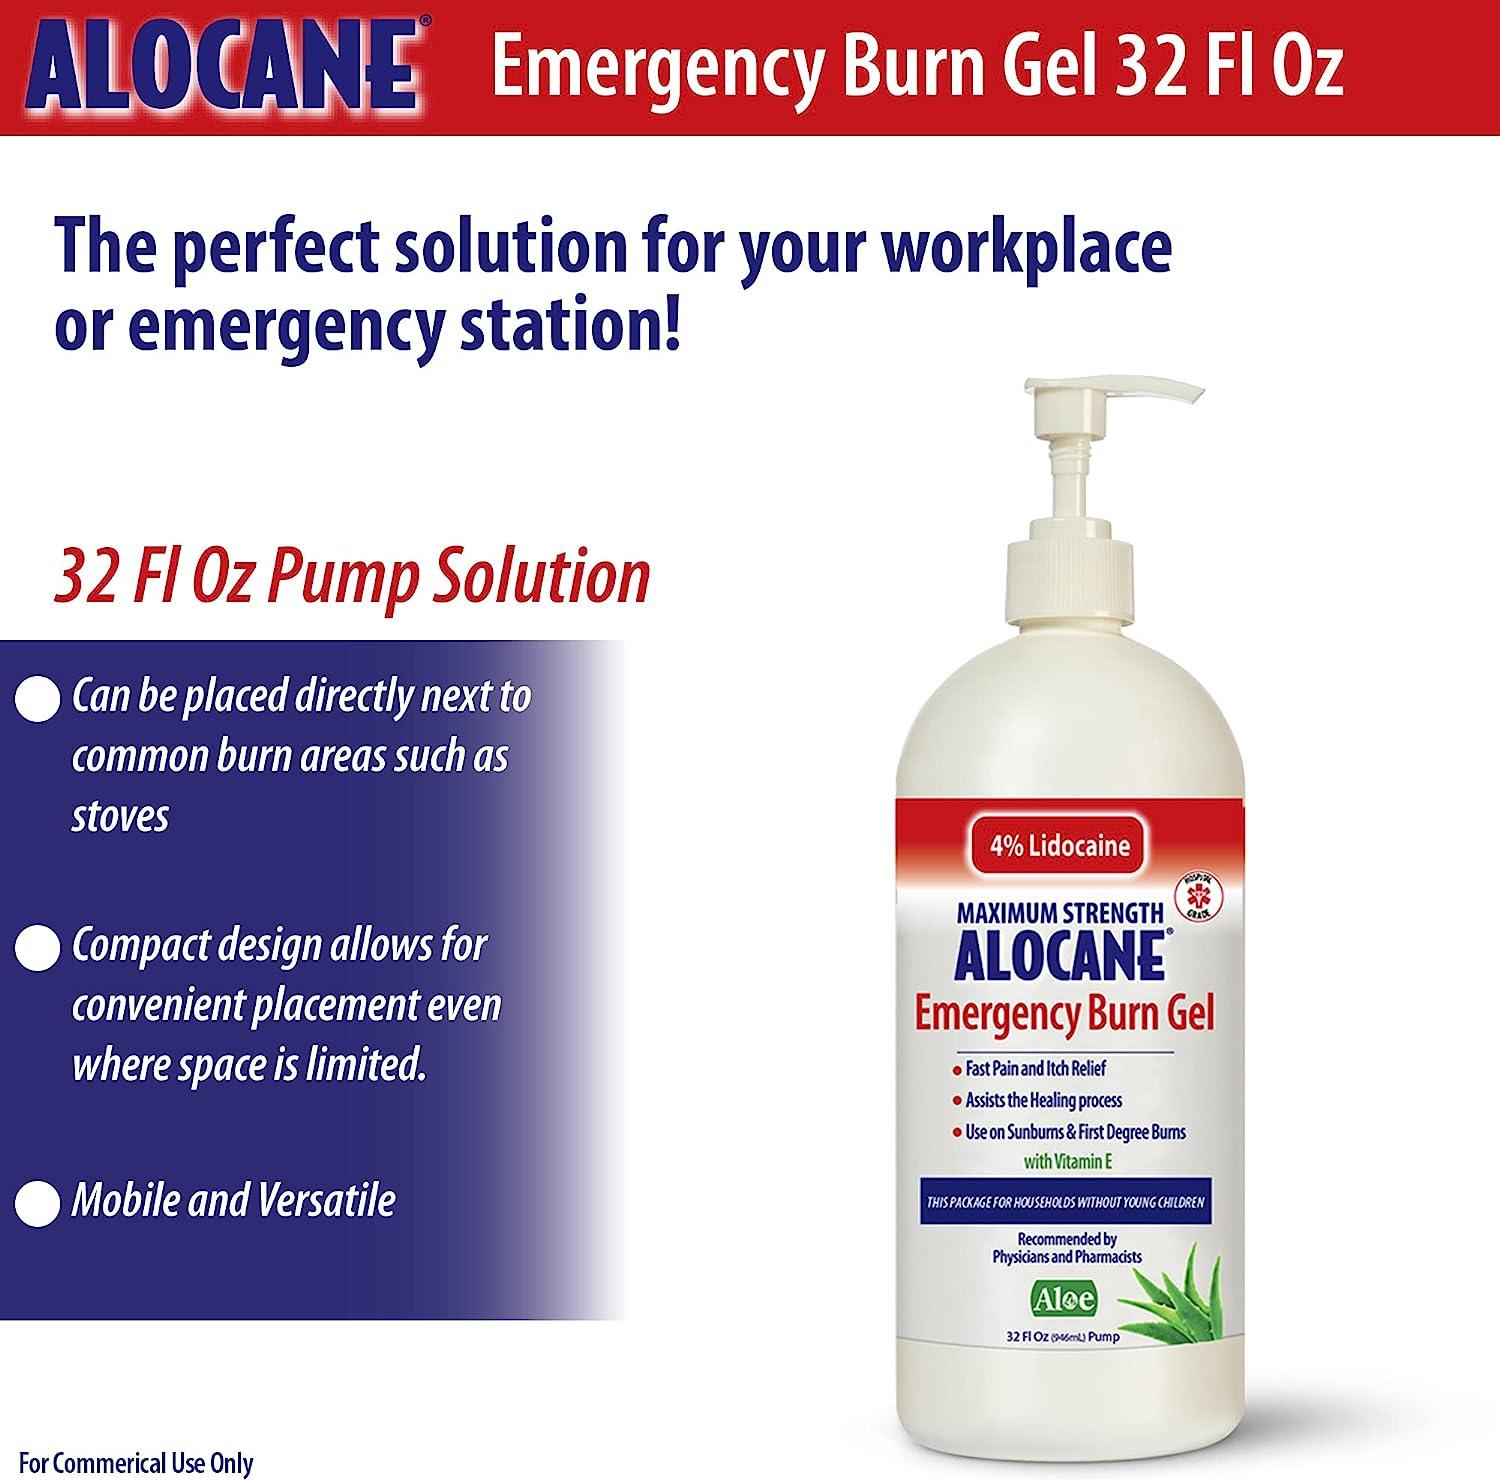  Alocane Emergency Burn Gel 4 Lidocaine Maximum